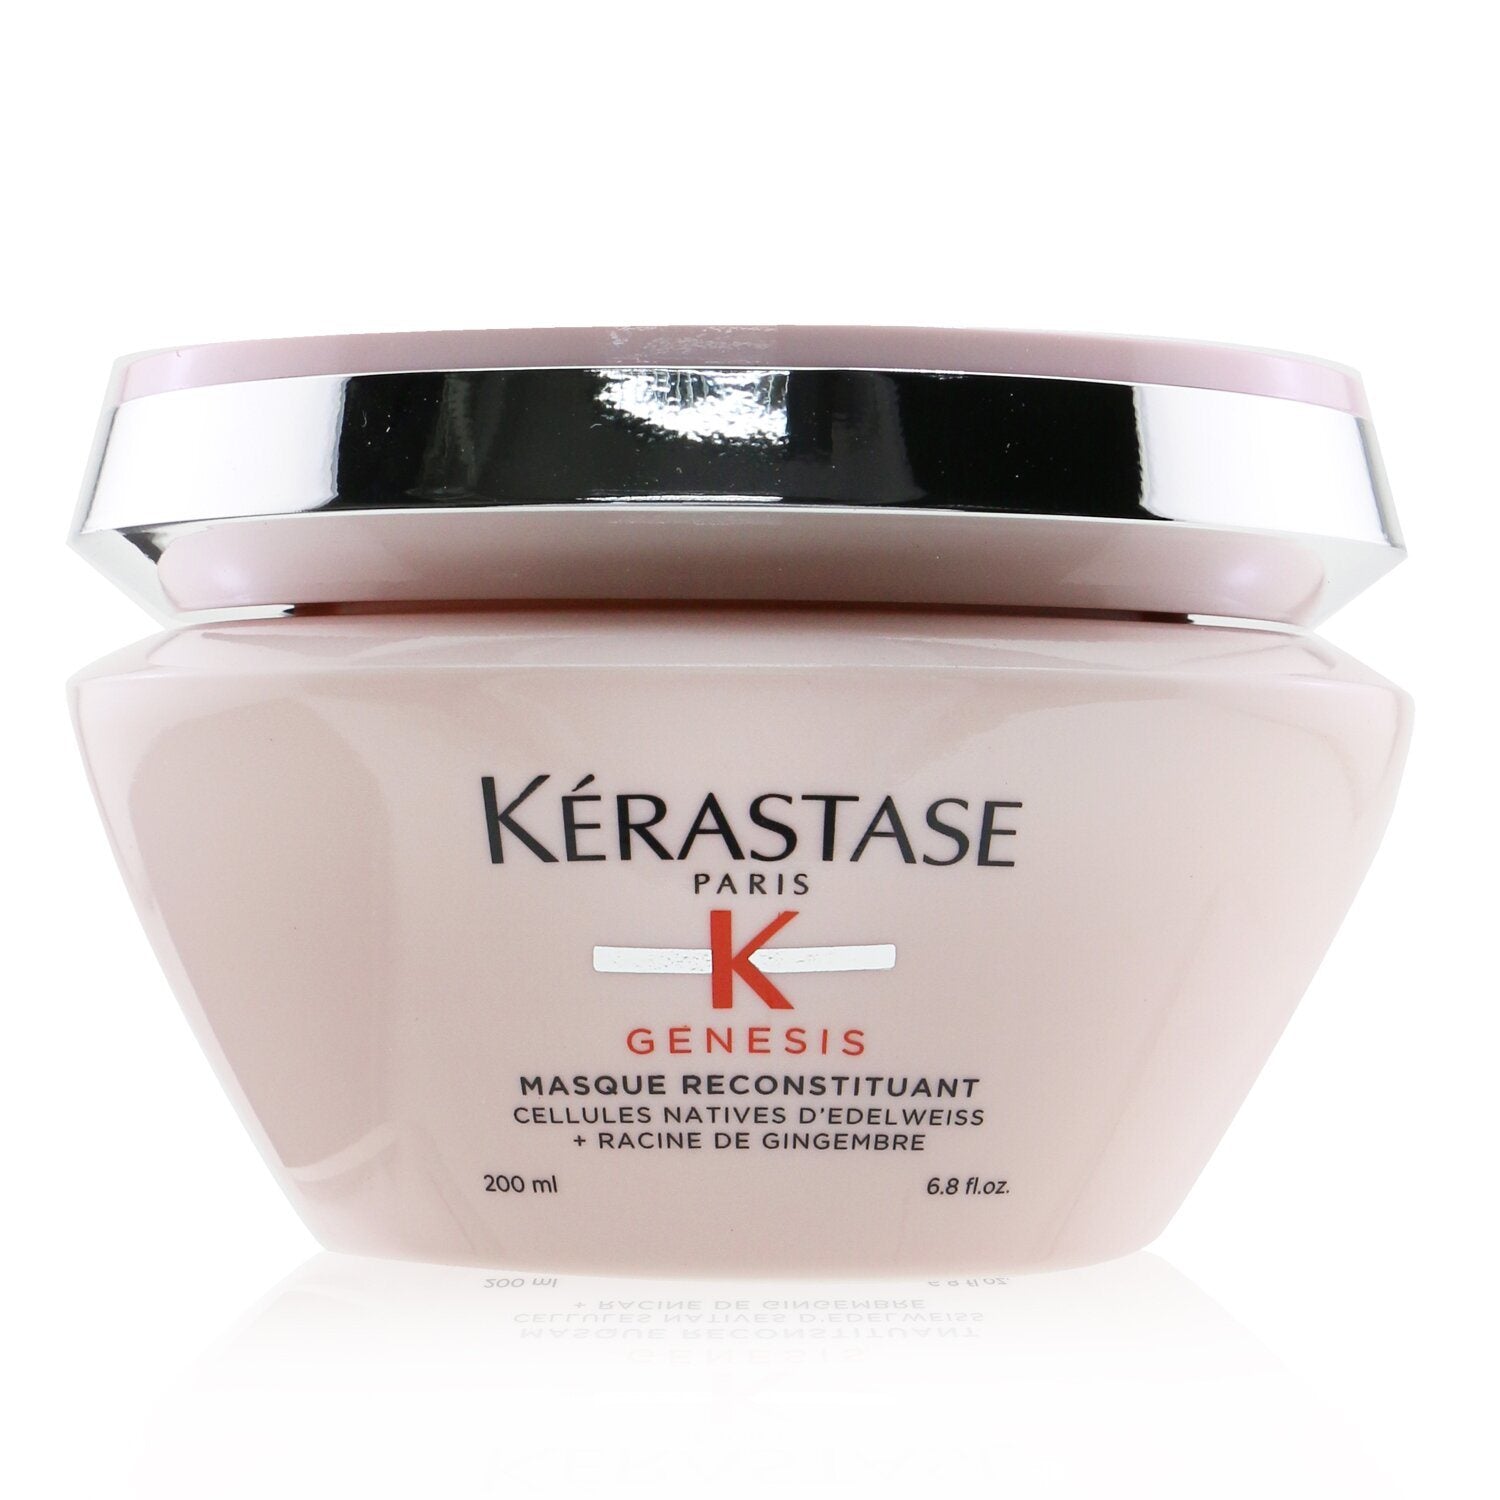 KERASTASE - Genesis Masque Reconstituant Intense Fortifying Masque (Weakened Hair, Prone To Falling Due To Breakage From Brushing) - 200ml/6.8oz 3P's Inclusive Beauty